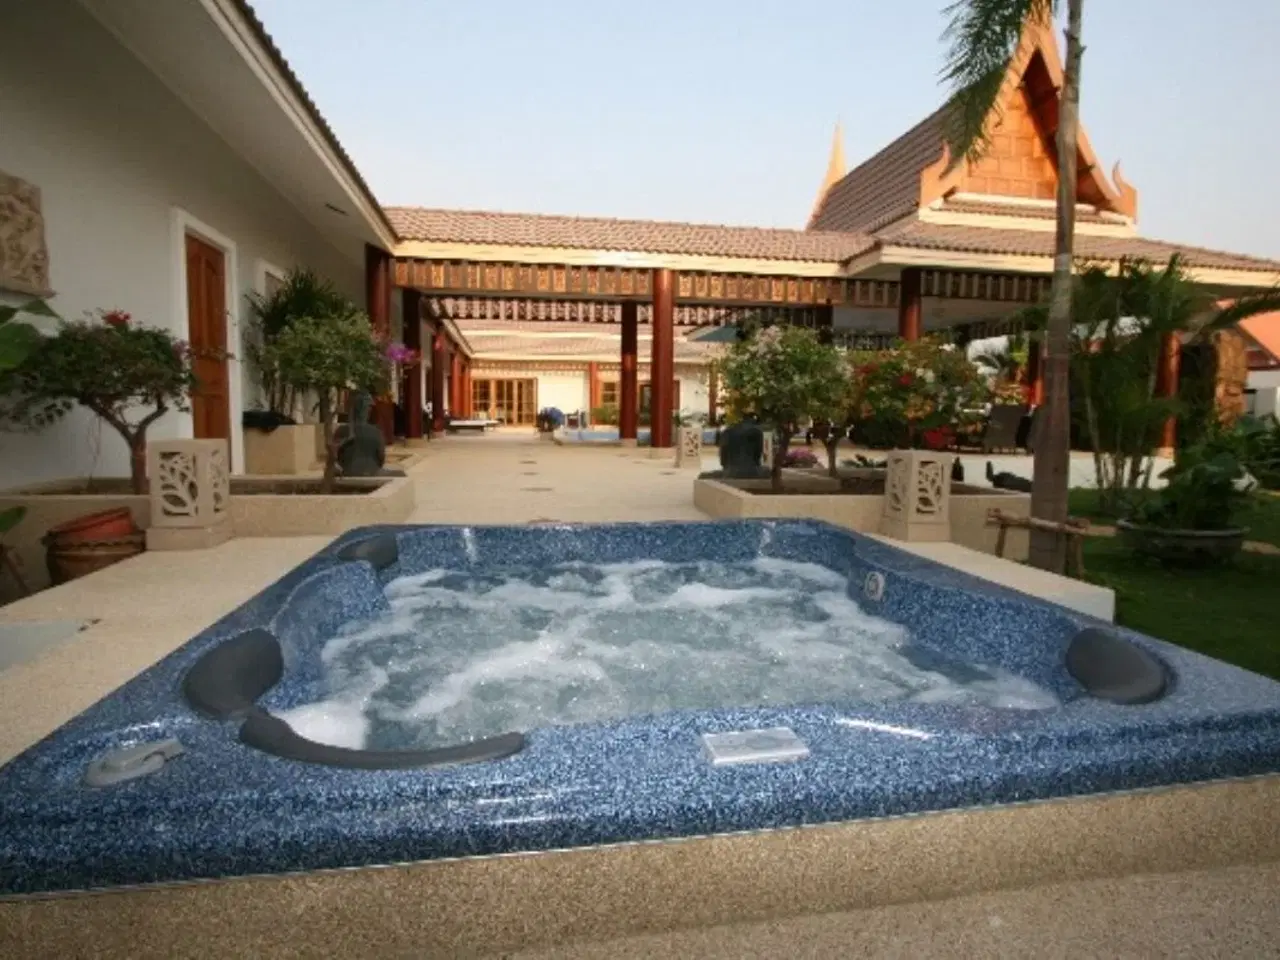 Billede 2 - Lej bolig i Hua Hin Thailand, Pool villa